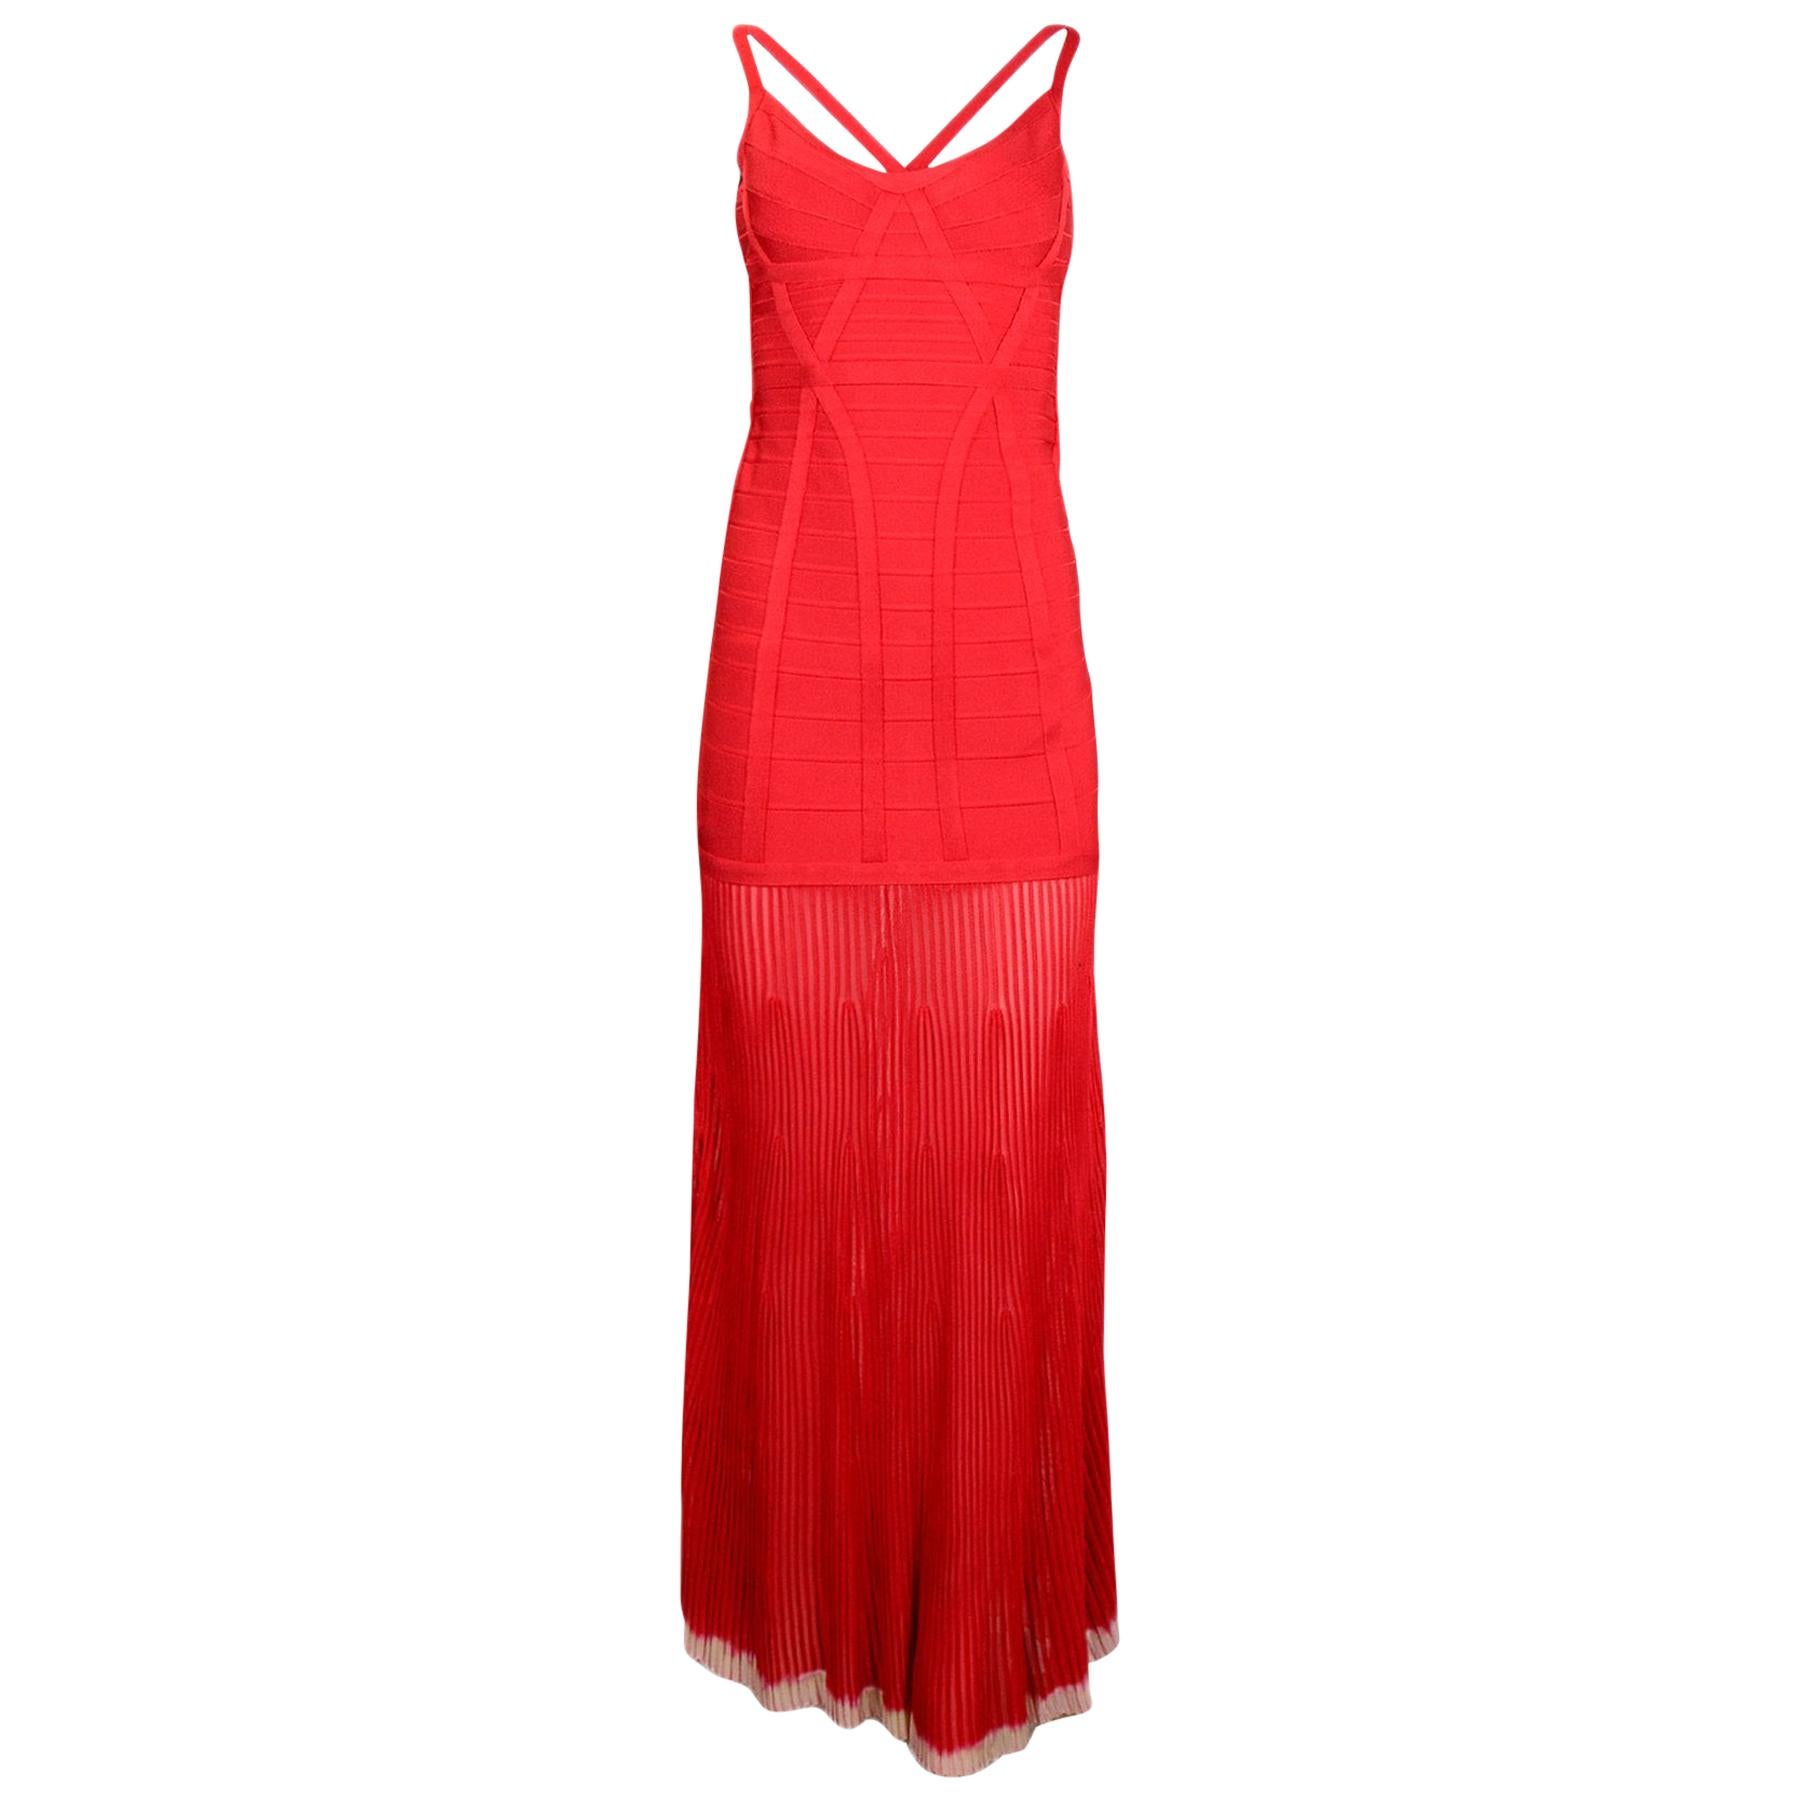 Herve Leger NWT Bright Poppy Red "Zhenya" Long Dress sz S rt. $1, 590